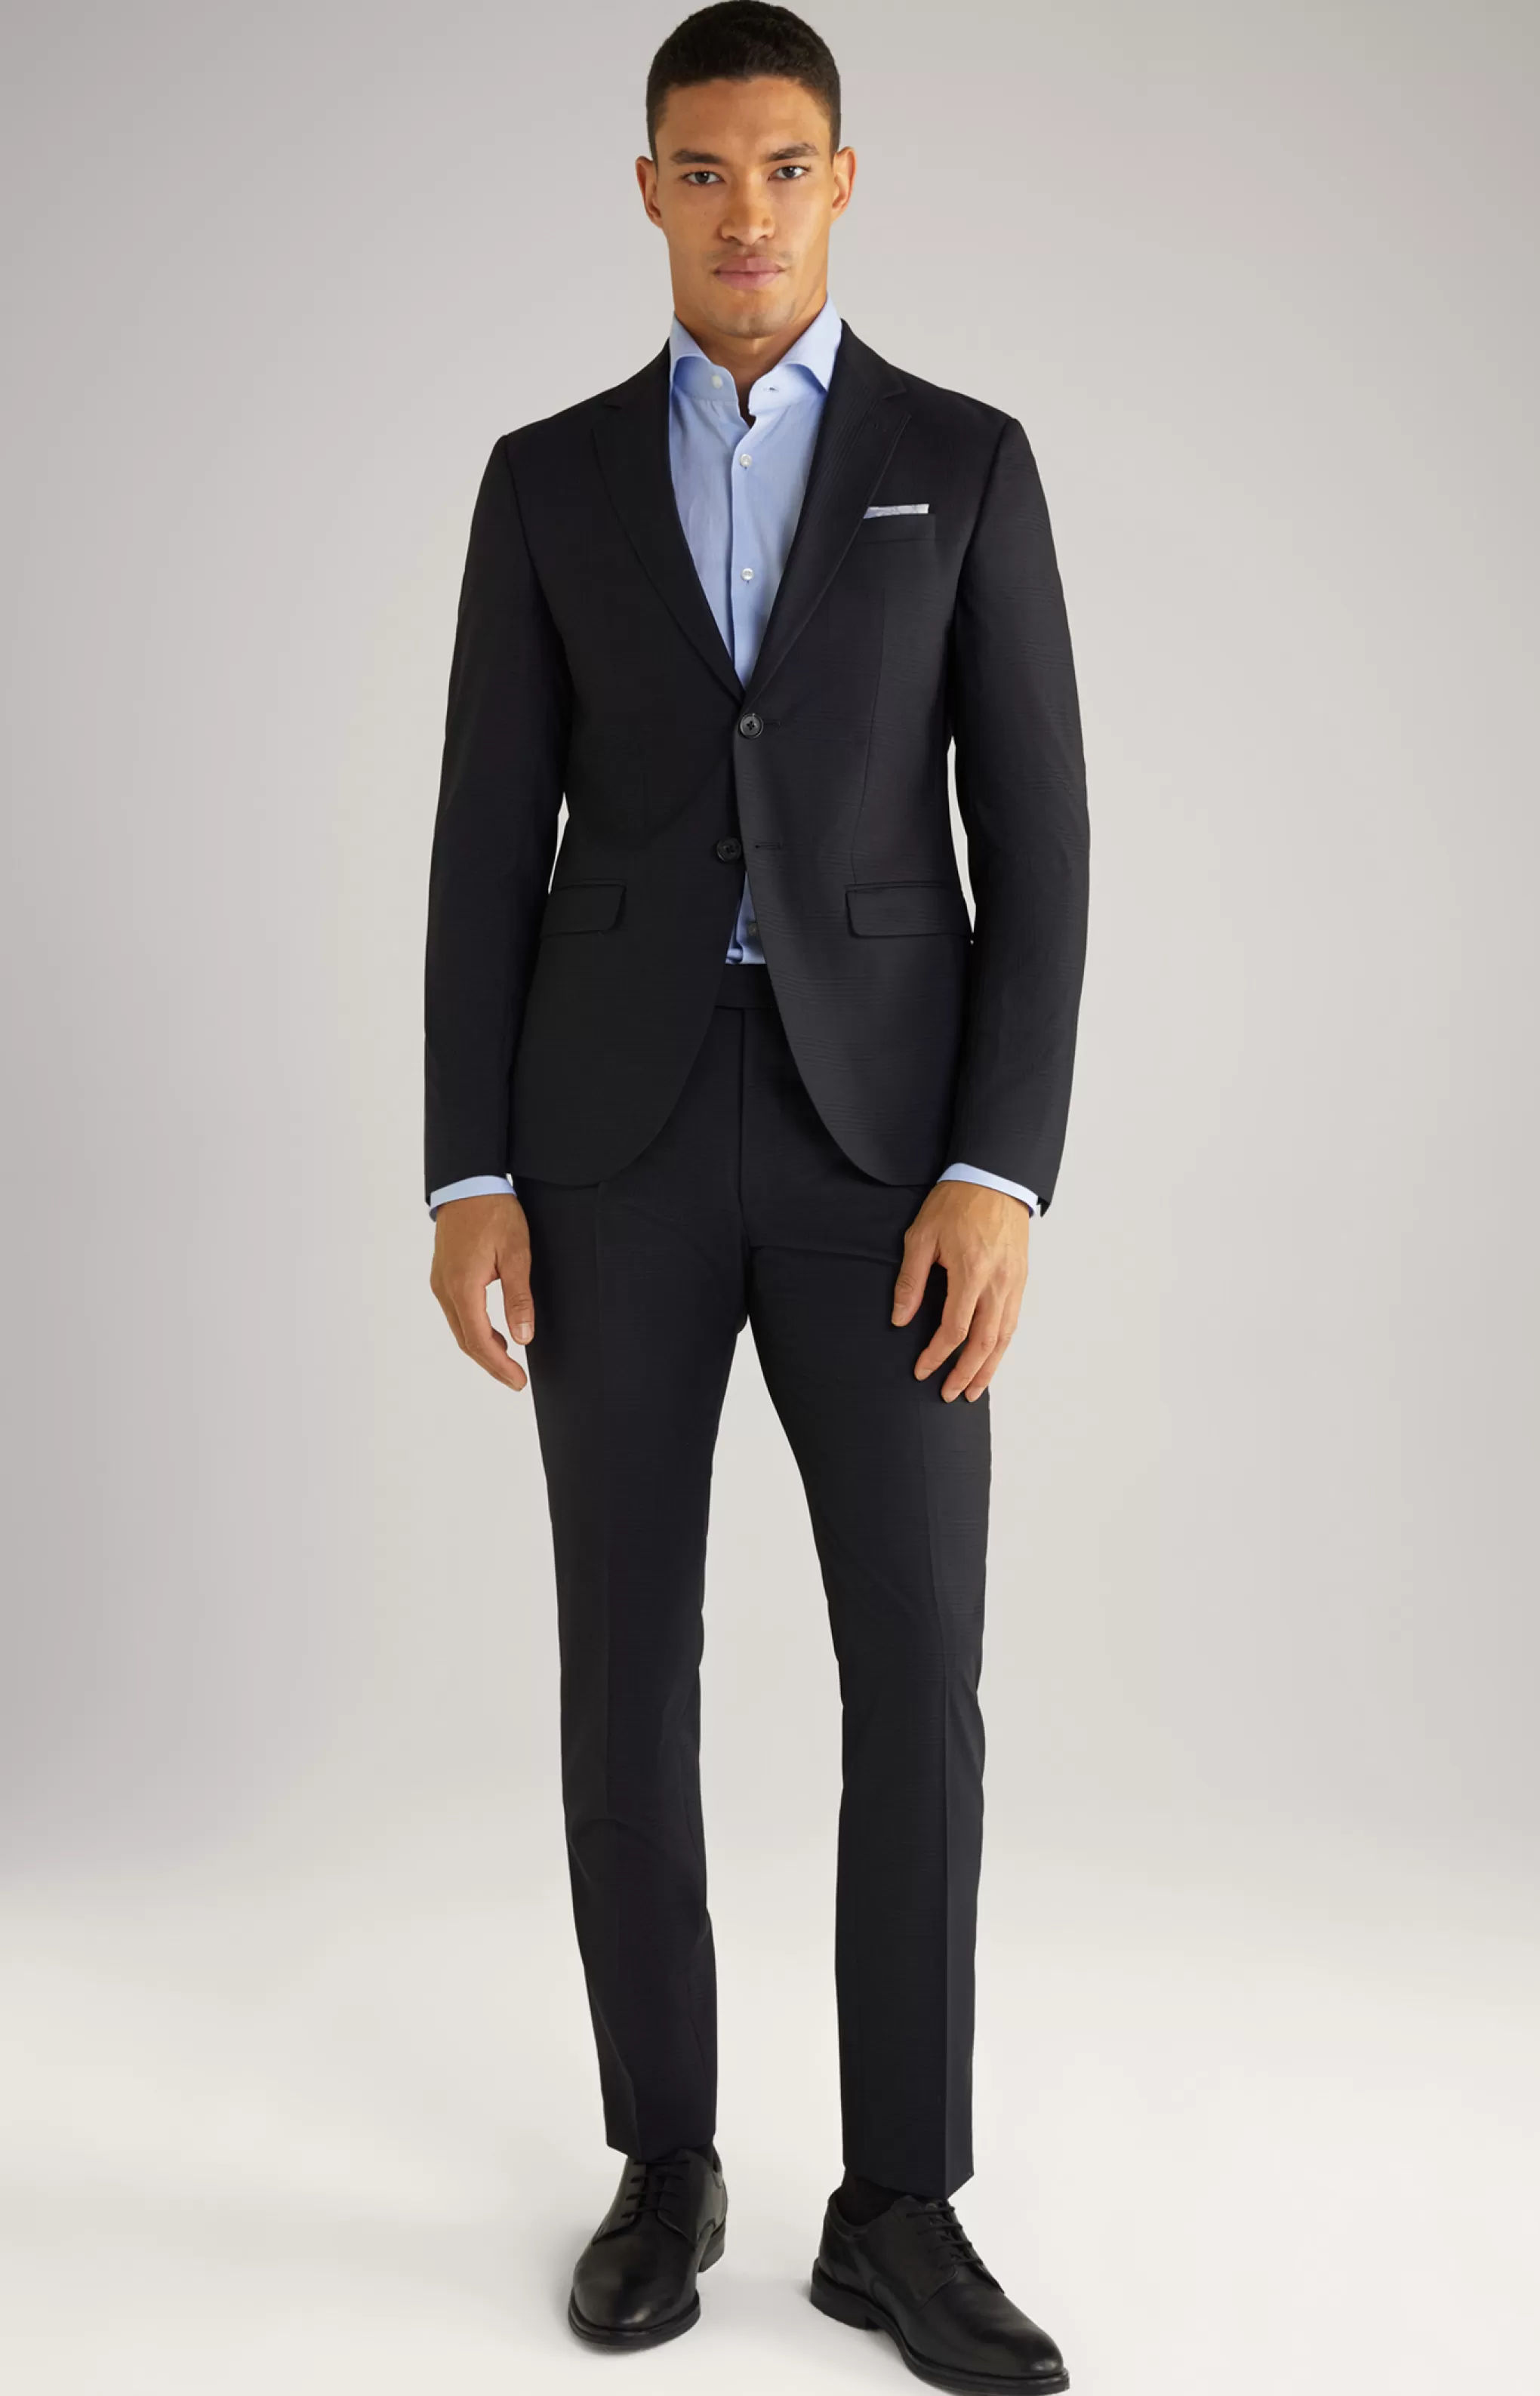 Suits | Clothing*JOOP Suits | Clothing Damon-Gun Virgin Wool Suit in Check